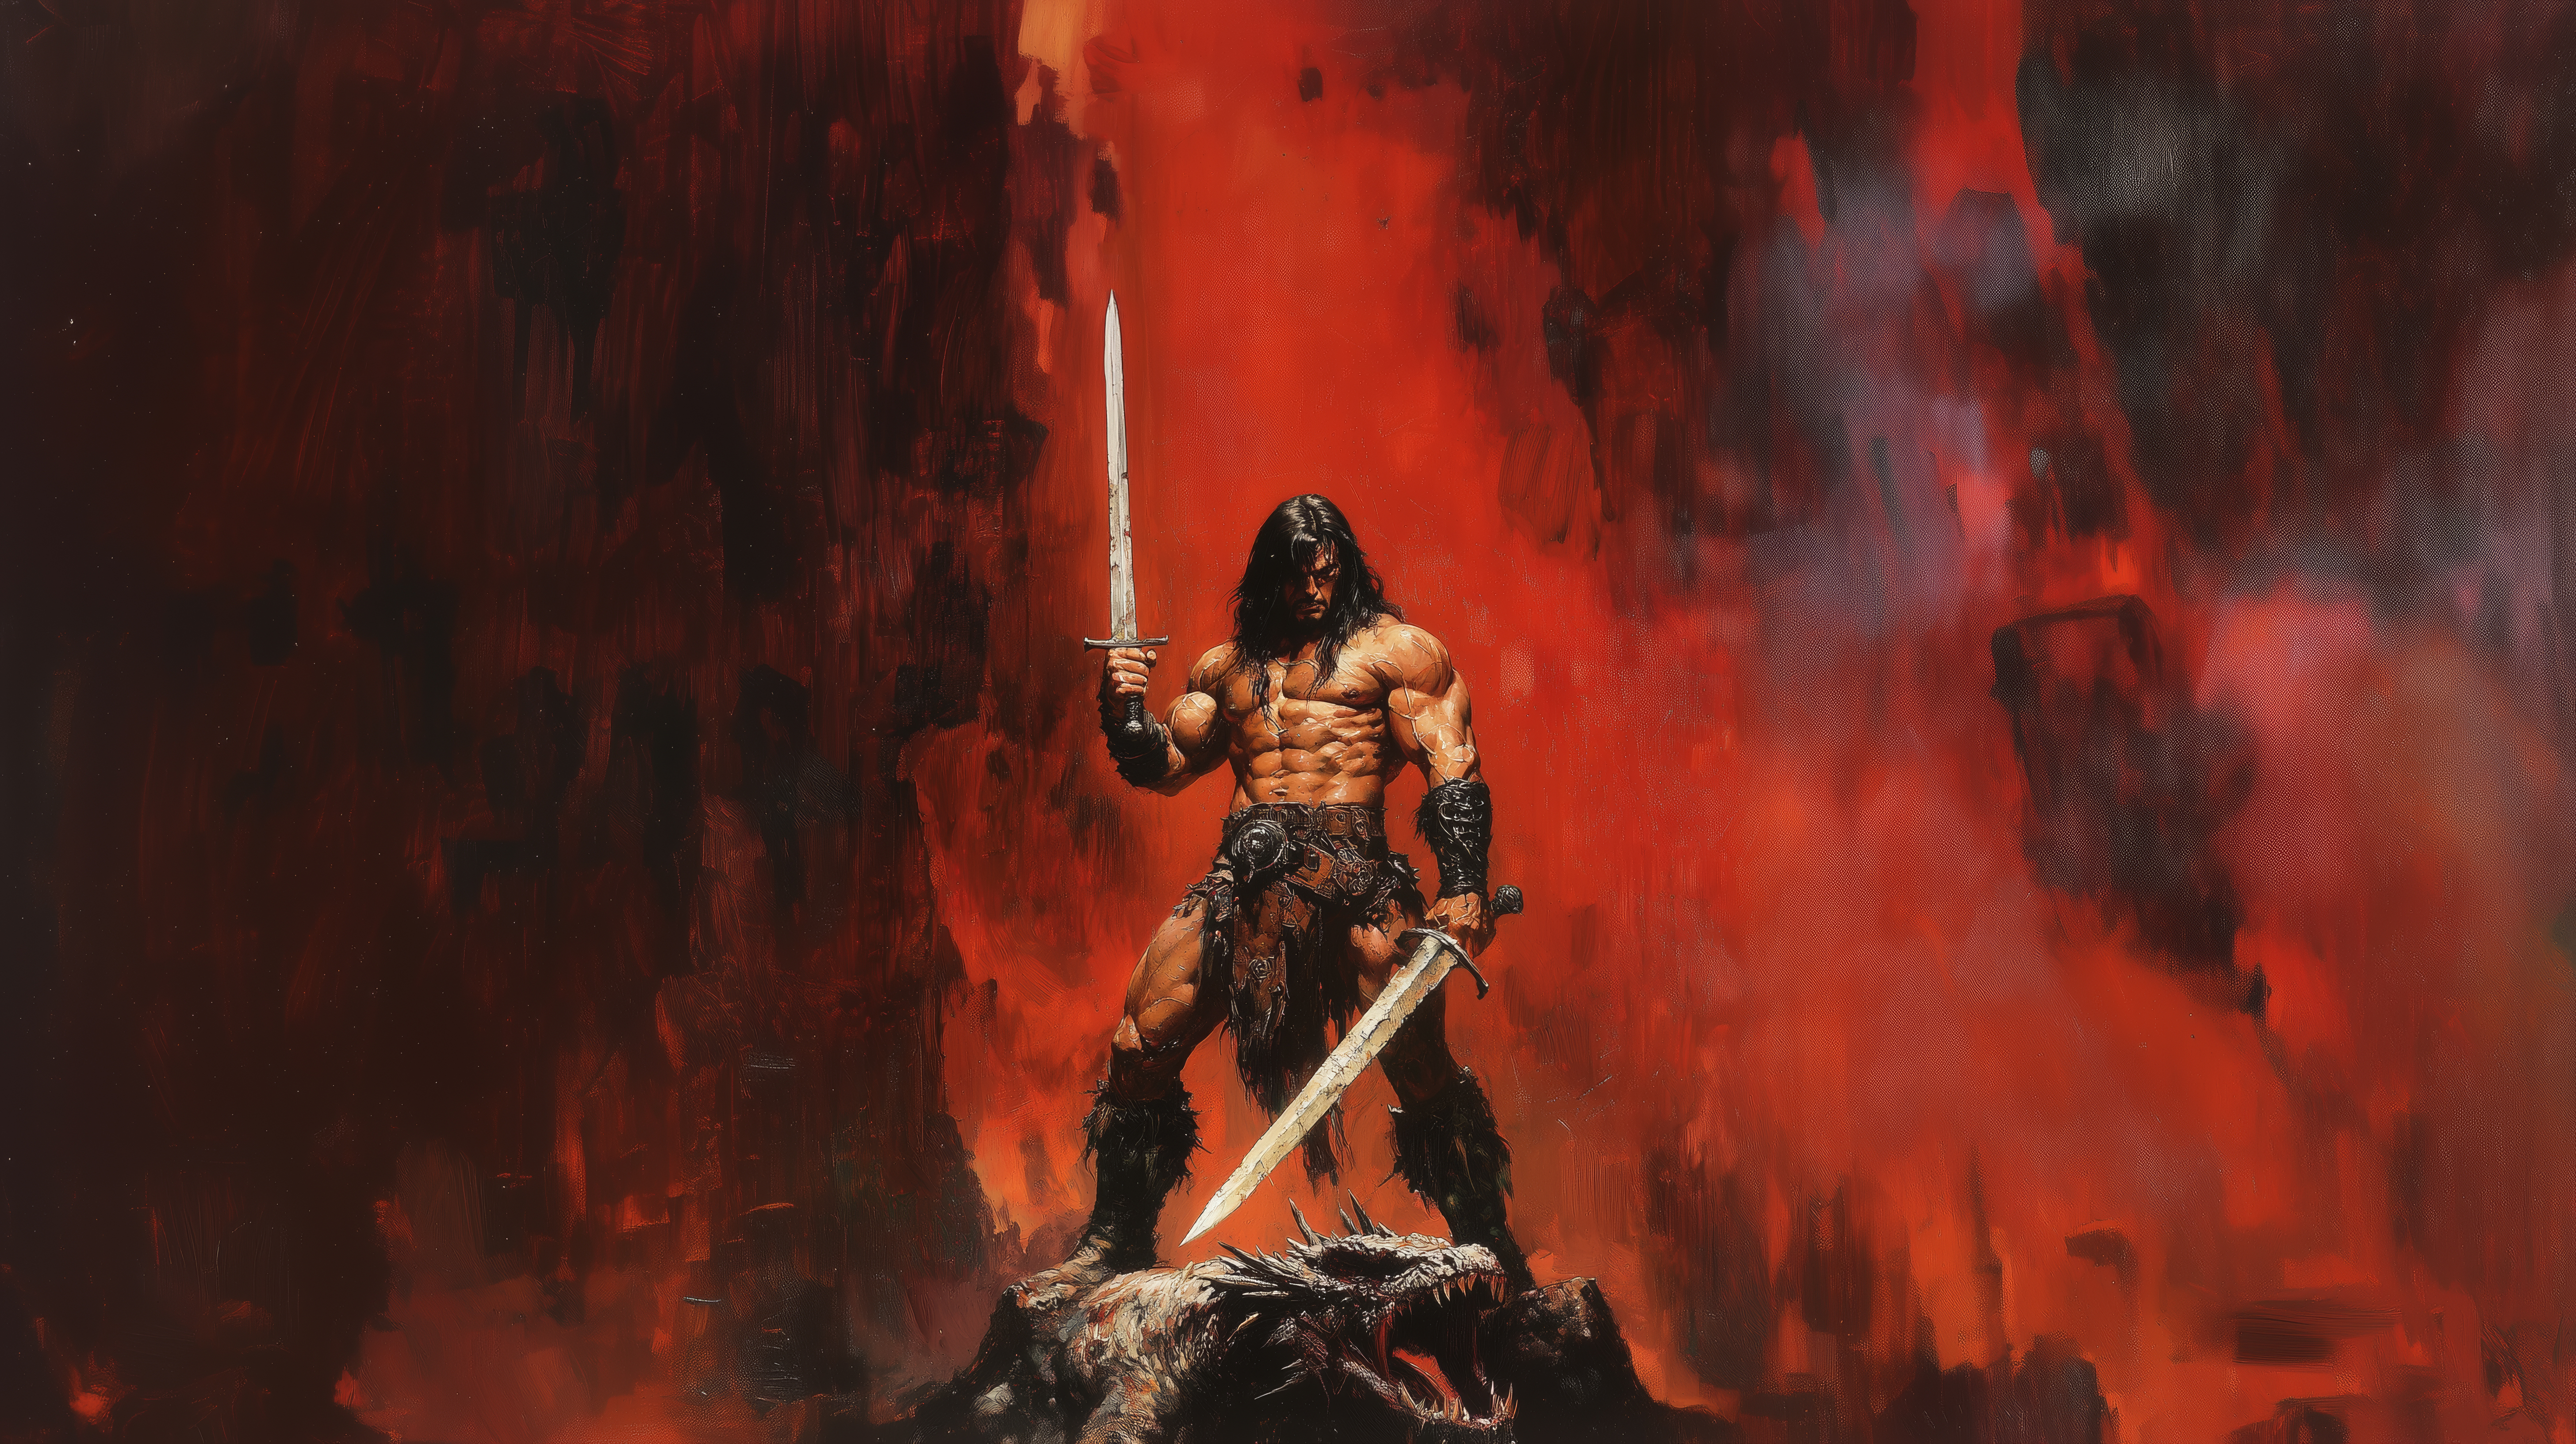 Warrior Sword Dragon Conan The Barbarian Red Fantasy Art Illustration Oil Painting Shirtless 5824x3264